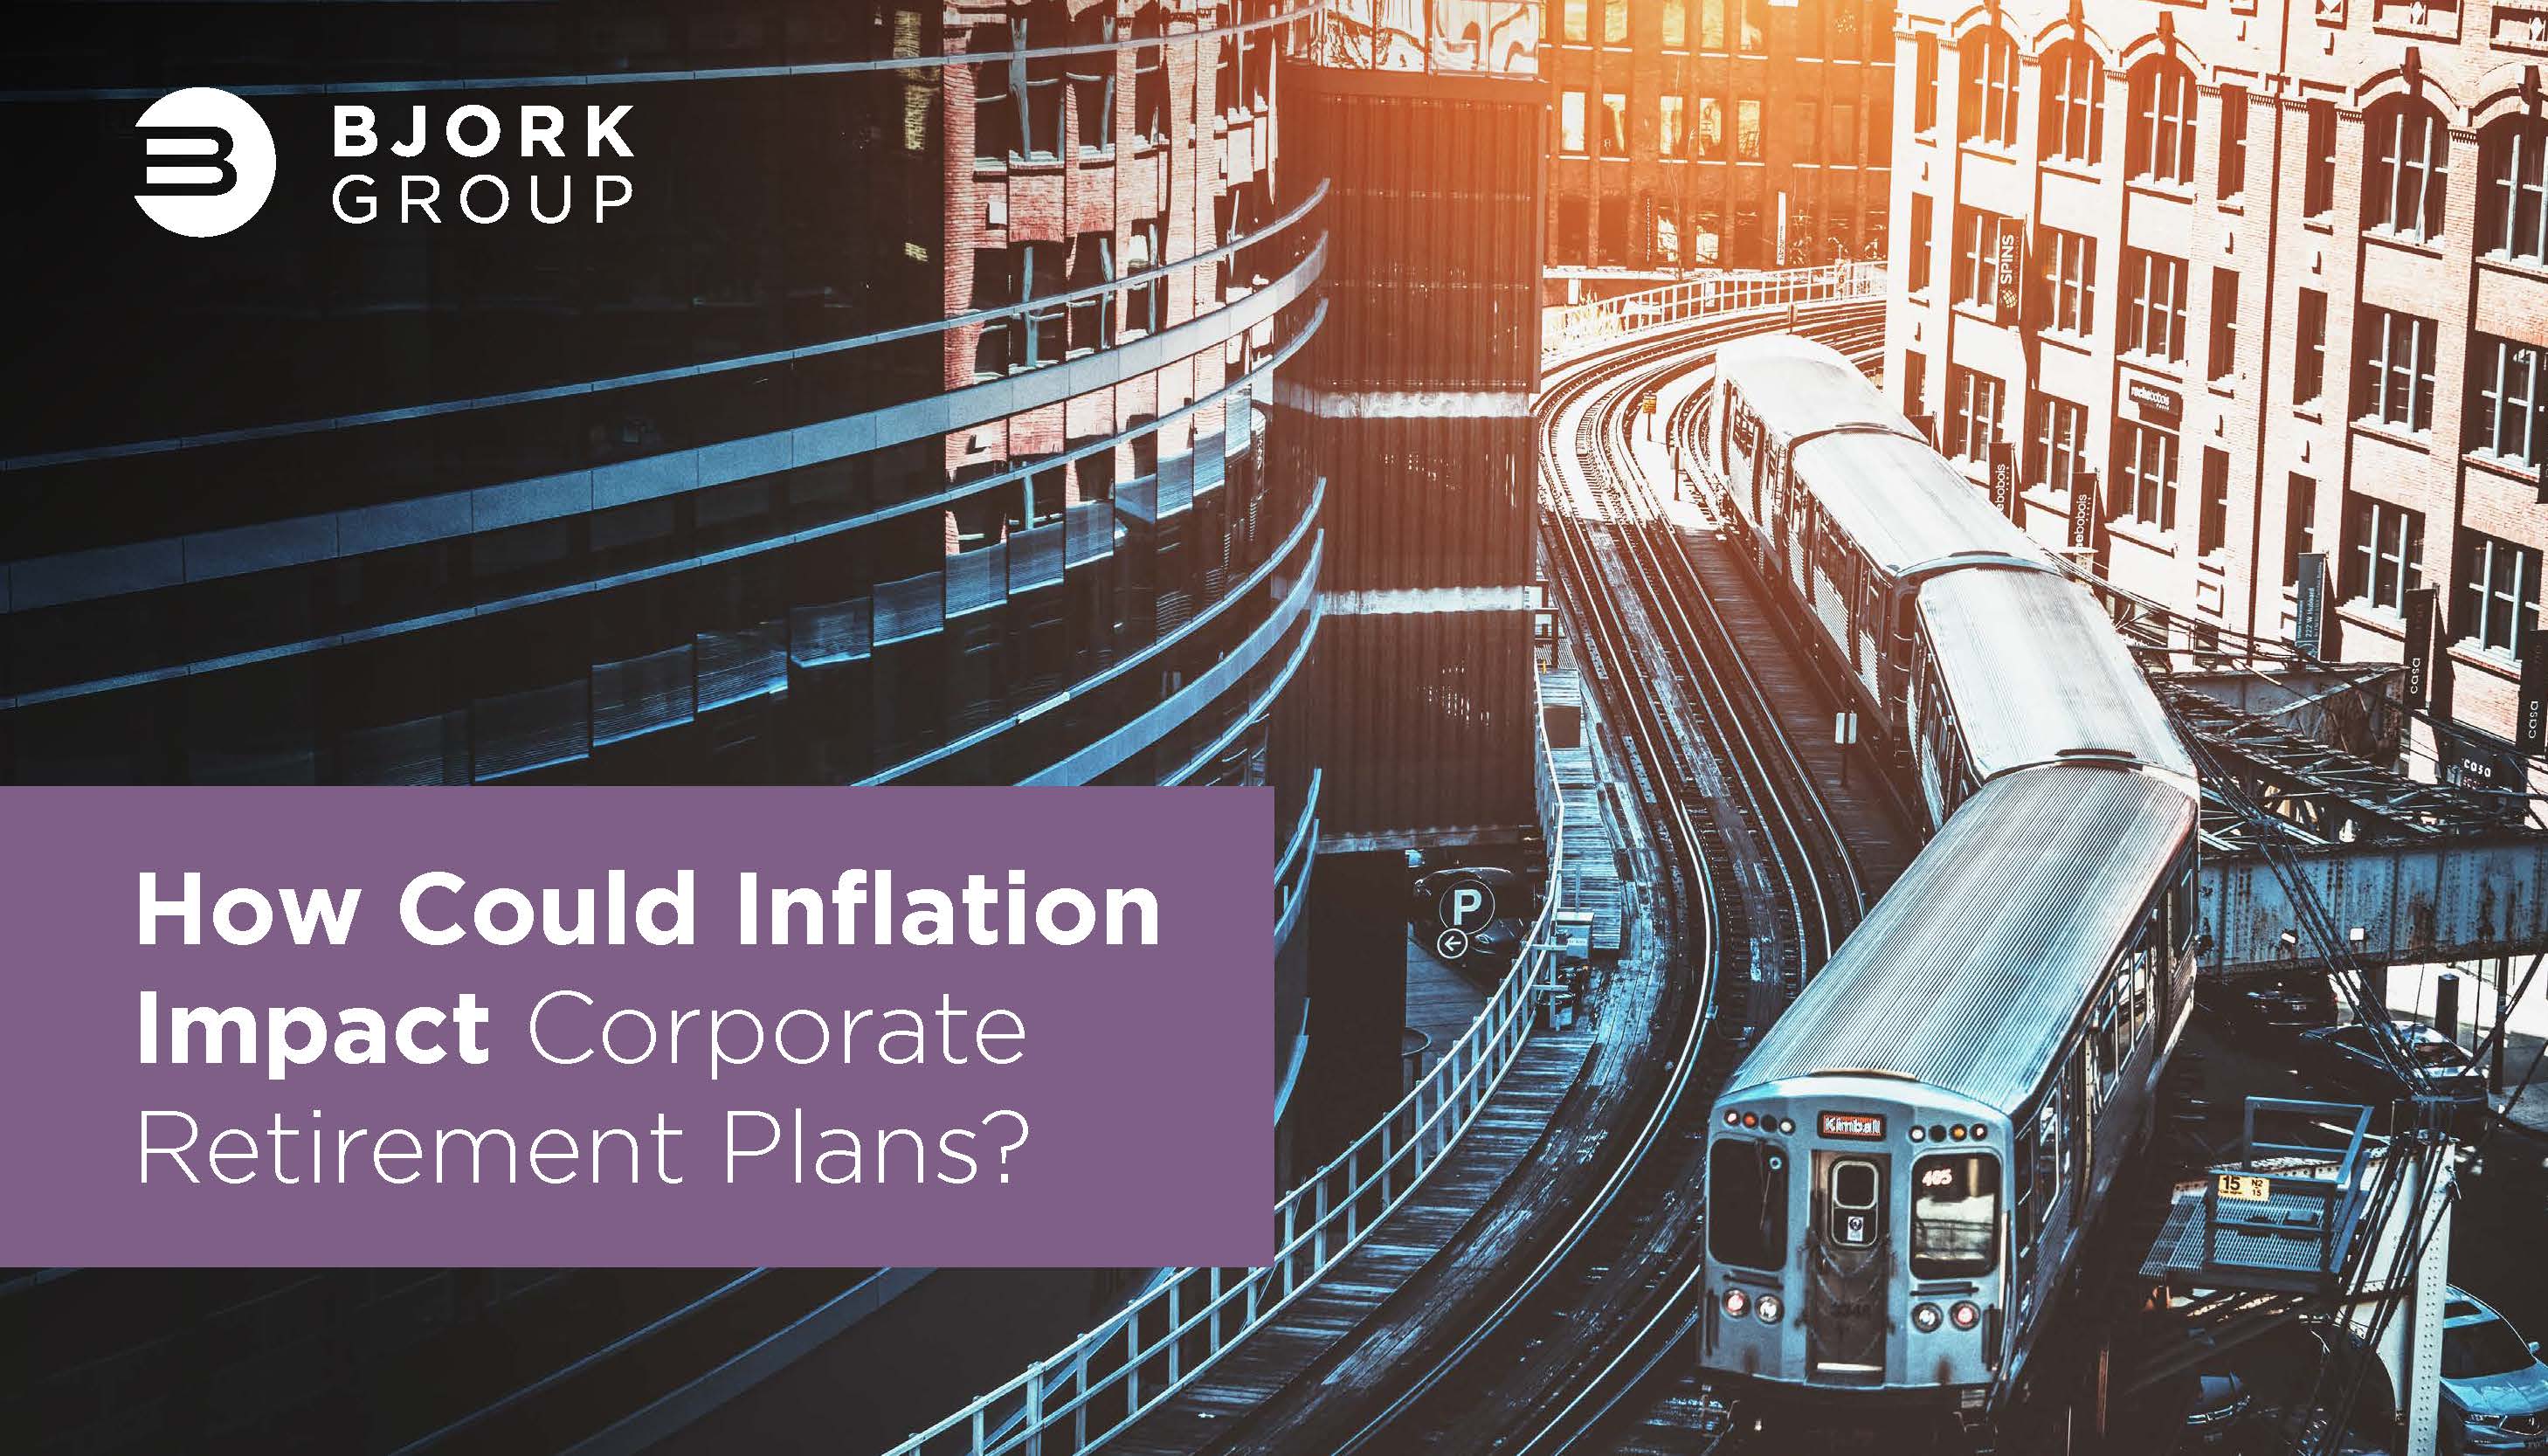 Bjork Group-Sean Bjork-Inflation Impacts